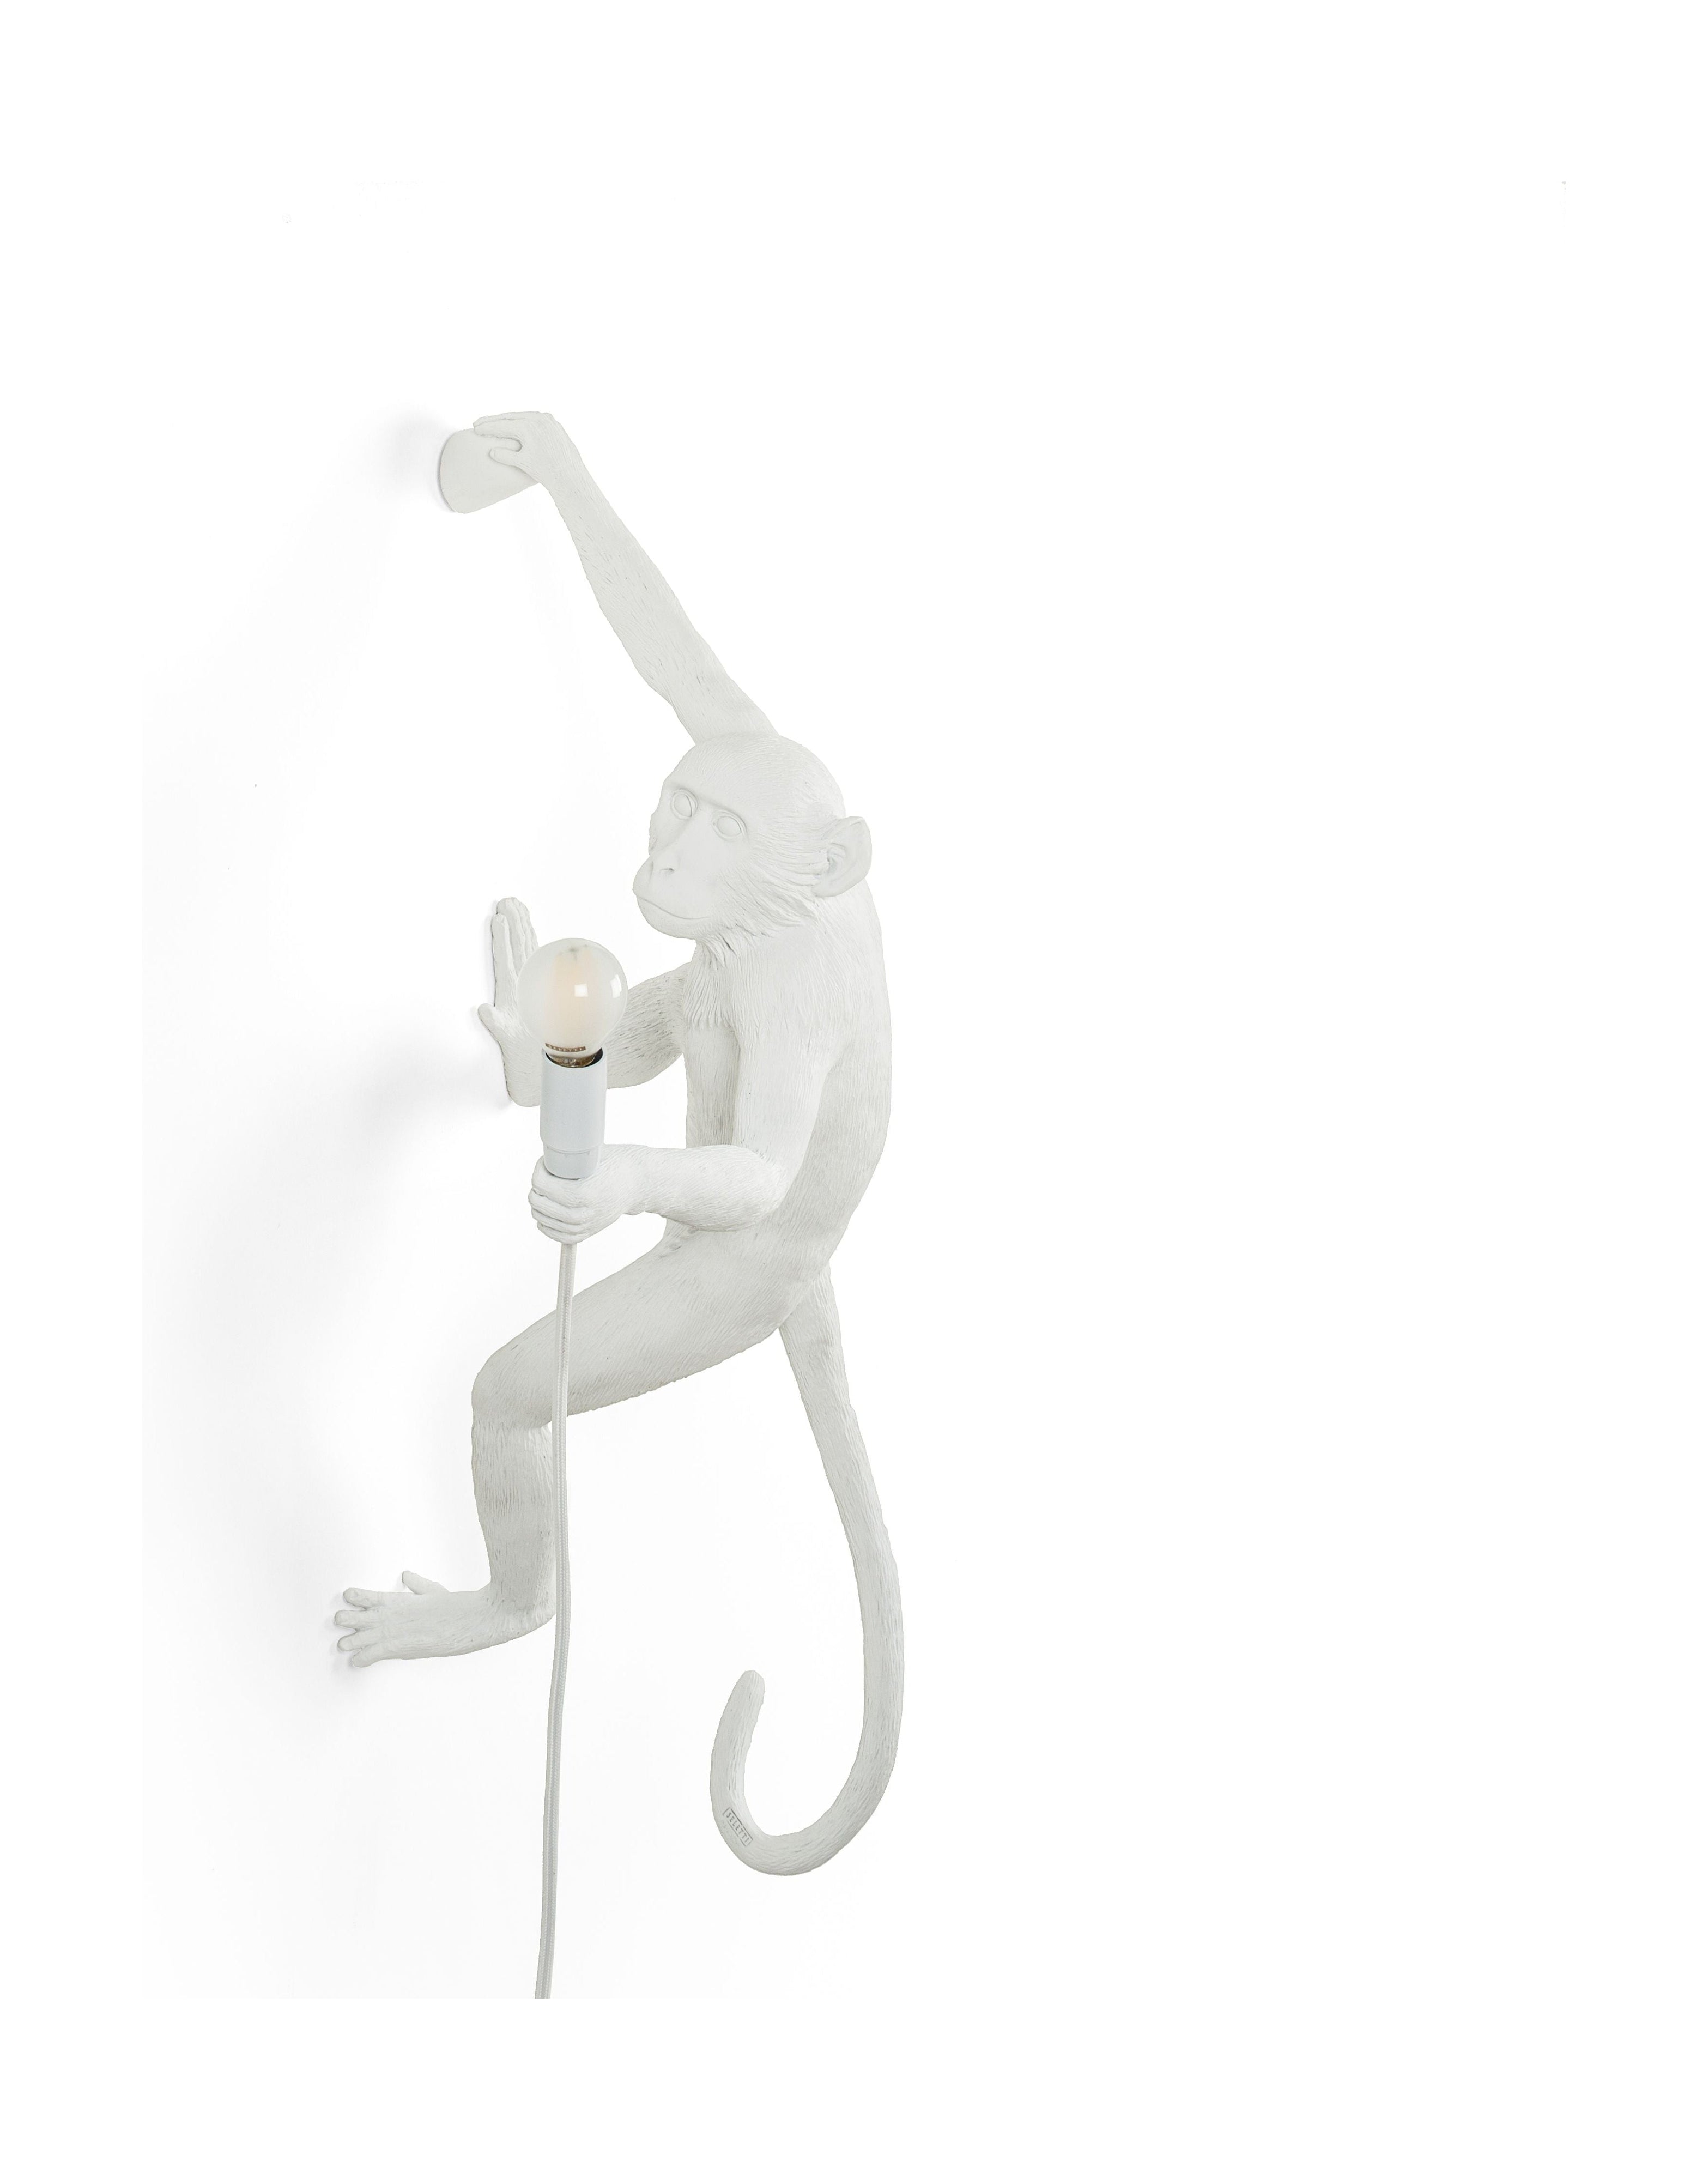 Monkey Seletti Lampada interna bianca, mano destra sospesa